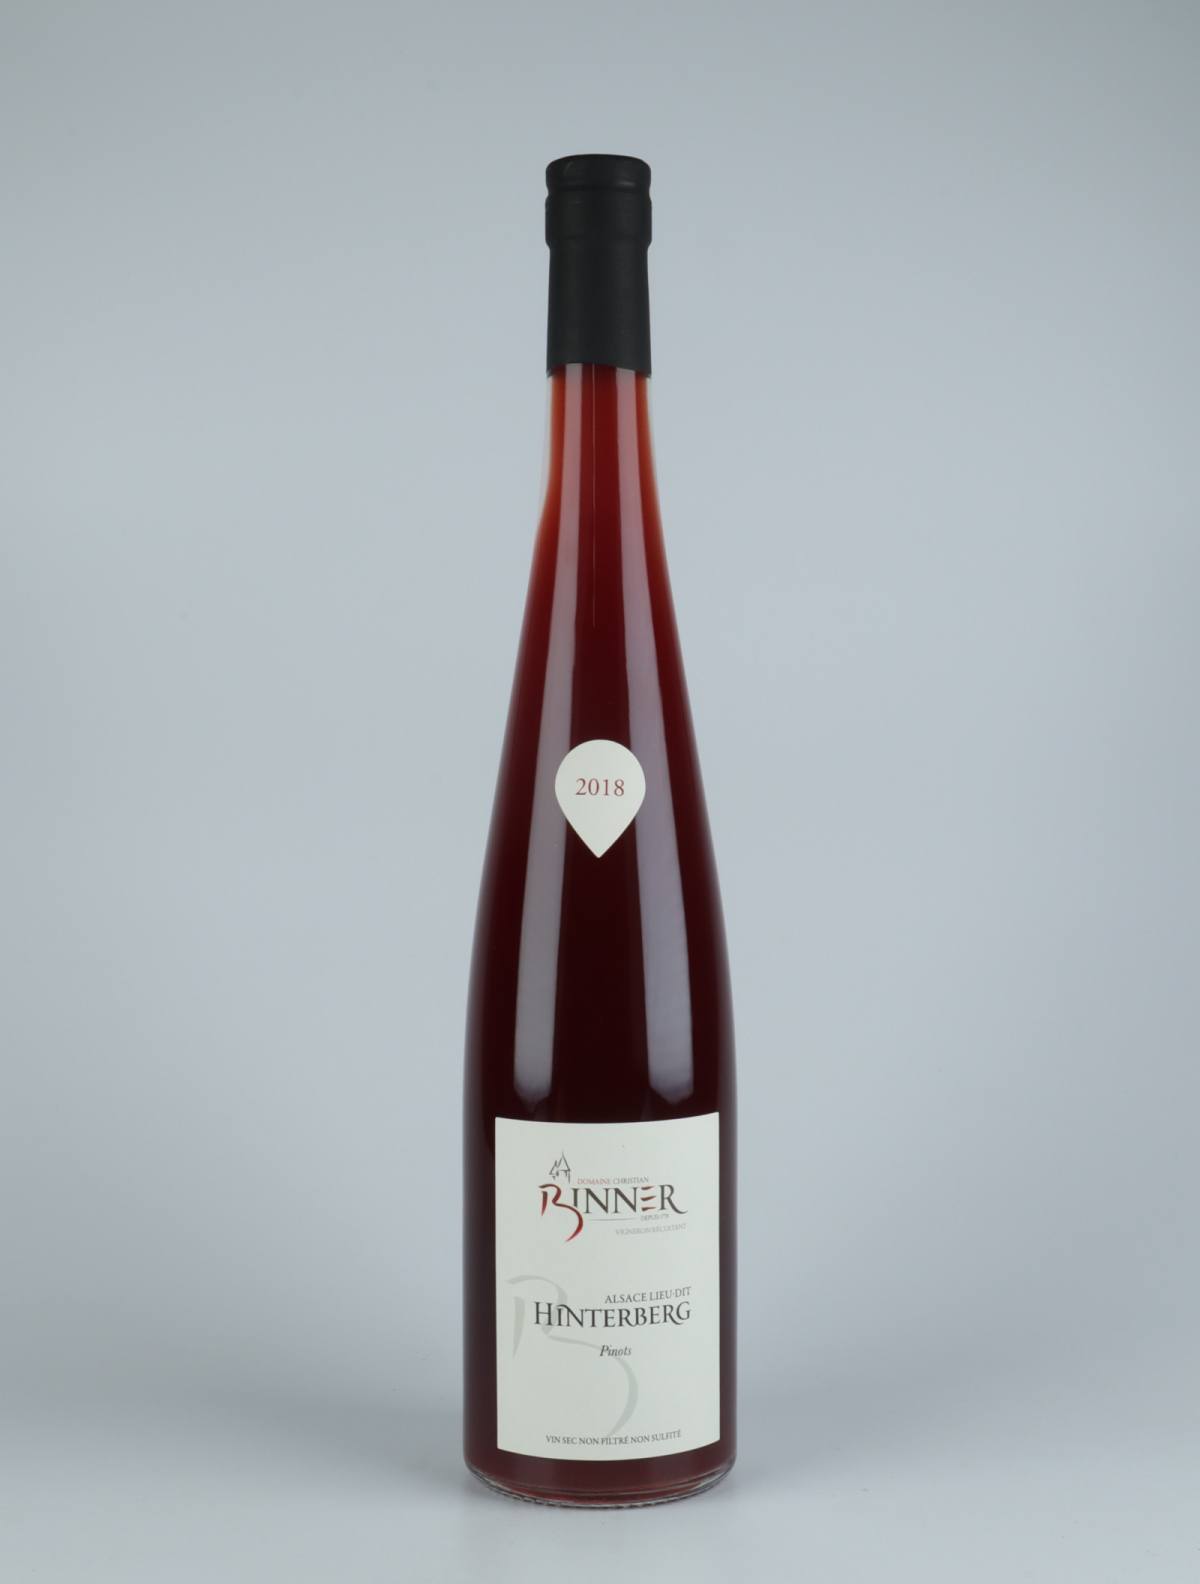 En flaske 2018 Hinterberg Pinots Rødvin fra Domaine Christian Binner, Alsace i Frankrig